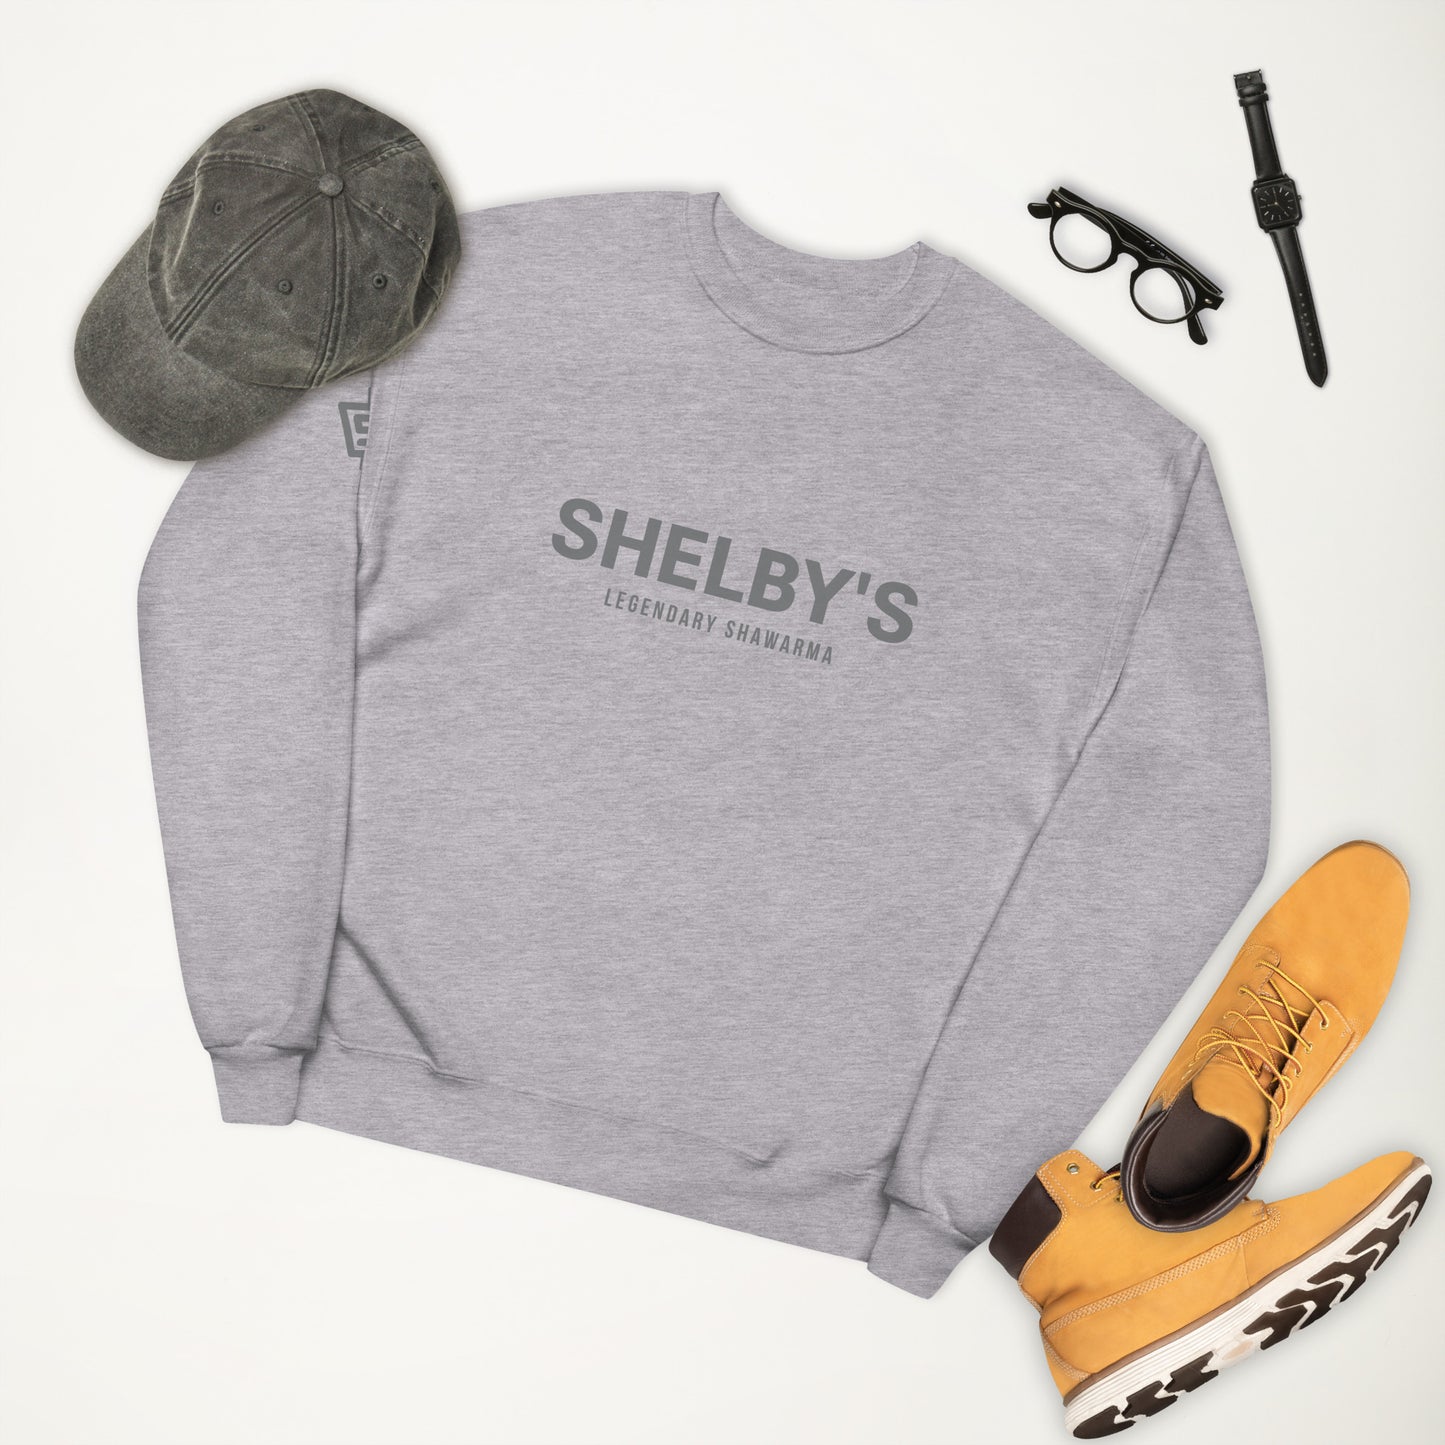 Shelby's Minimal - Sweatshirt